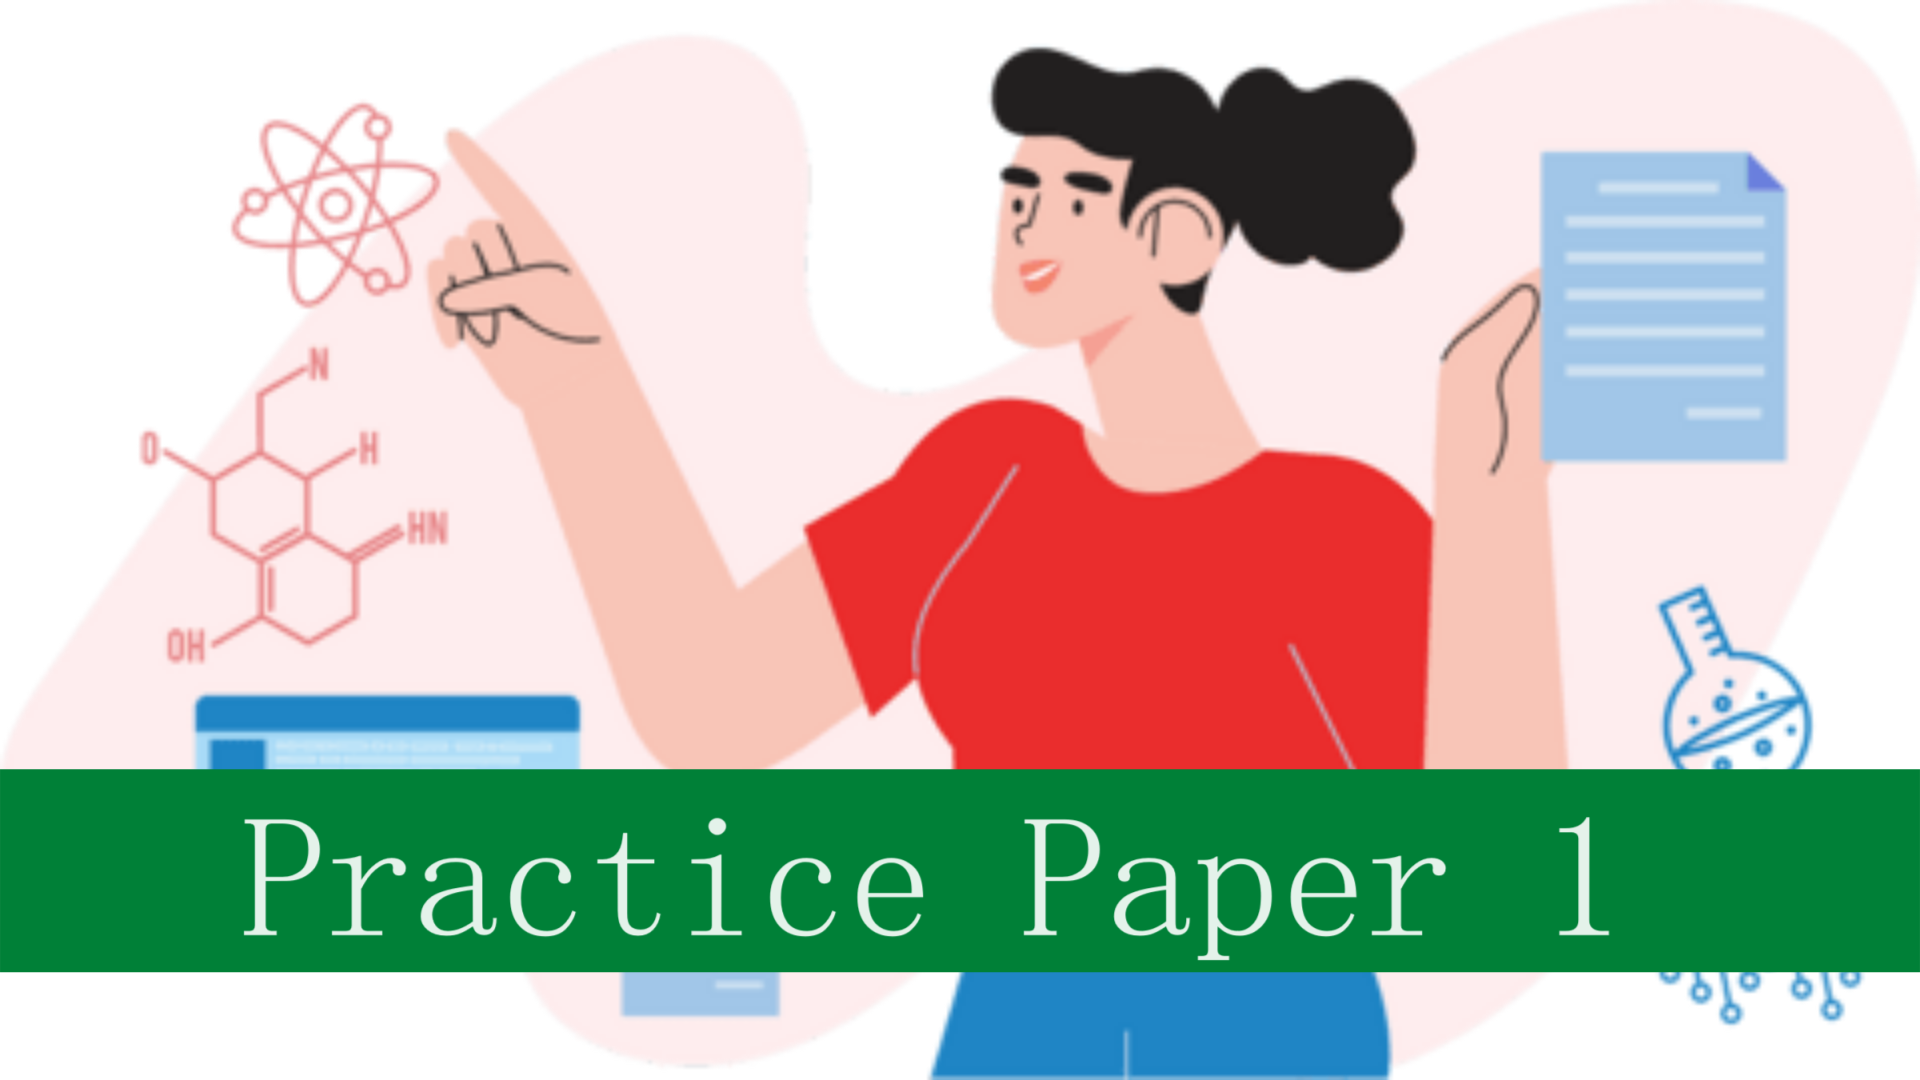 Practice Paper 1